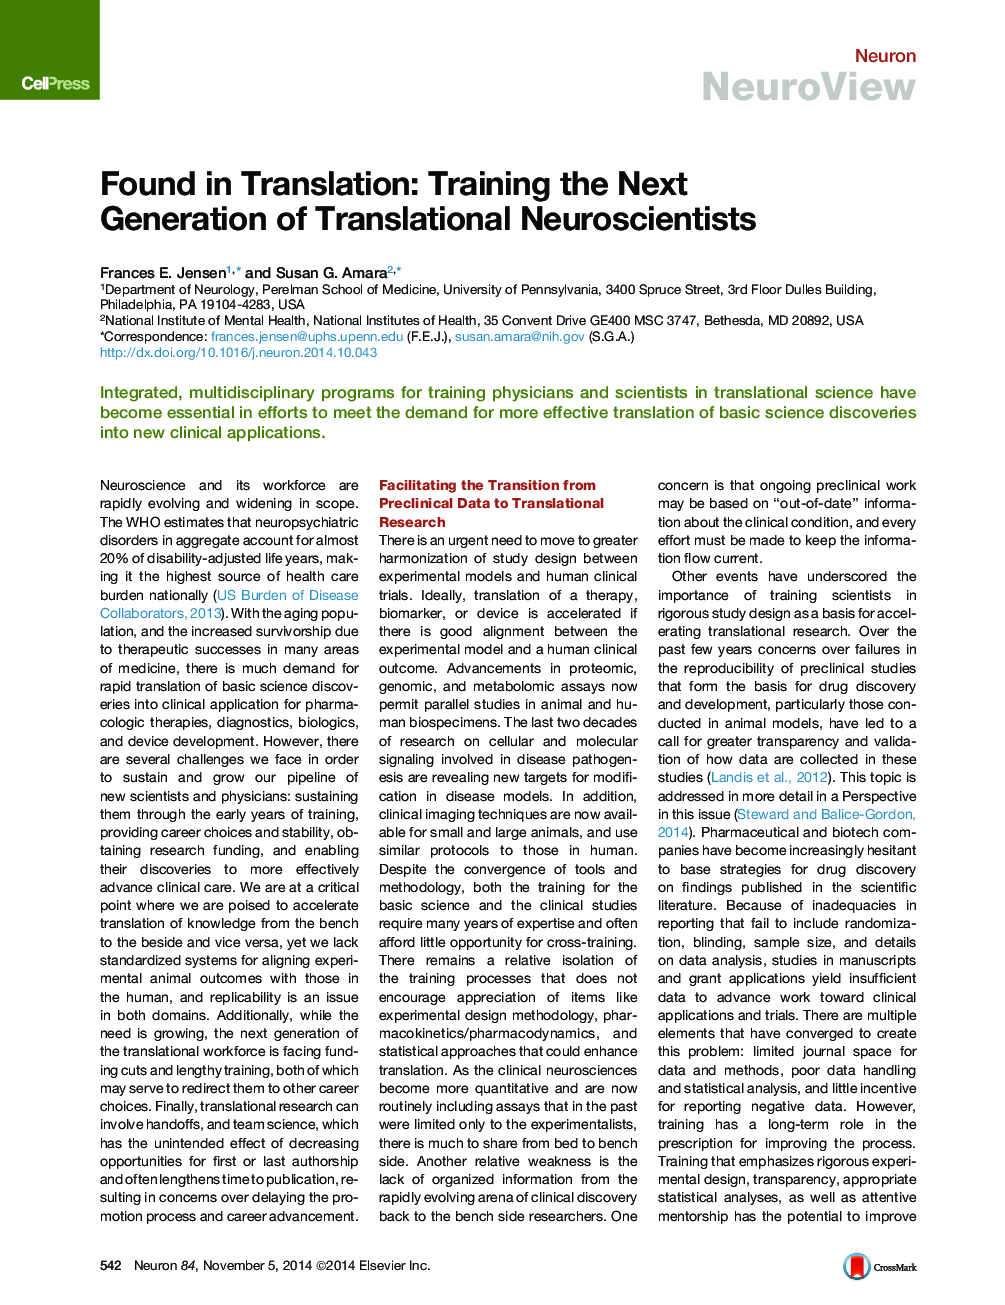 Found in Translation: Training the Next Generation of Translational Neuroscientists